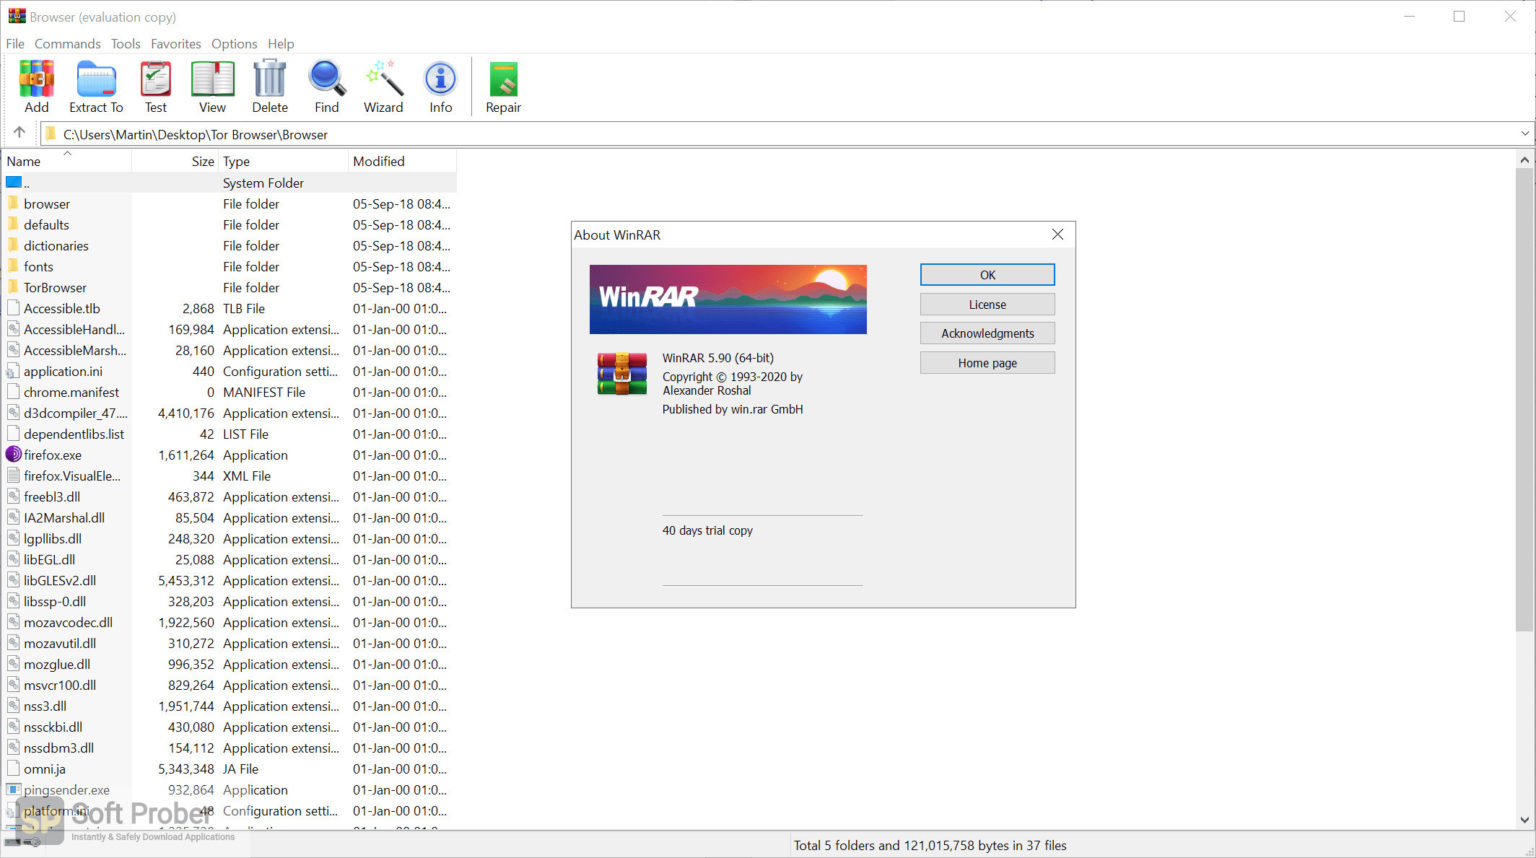 winrar for windows 7 32 bit offline installer